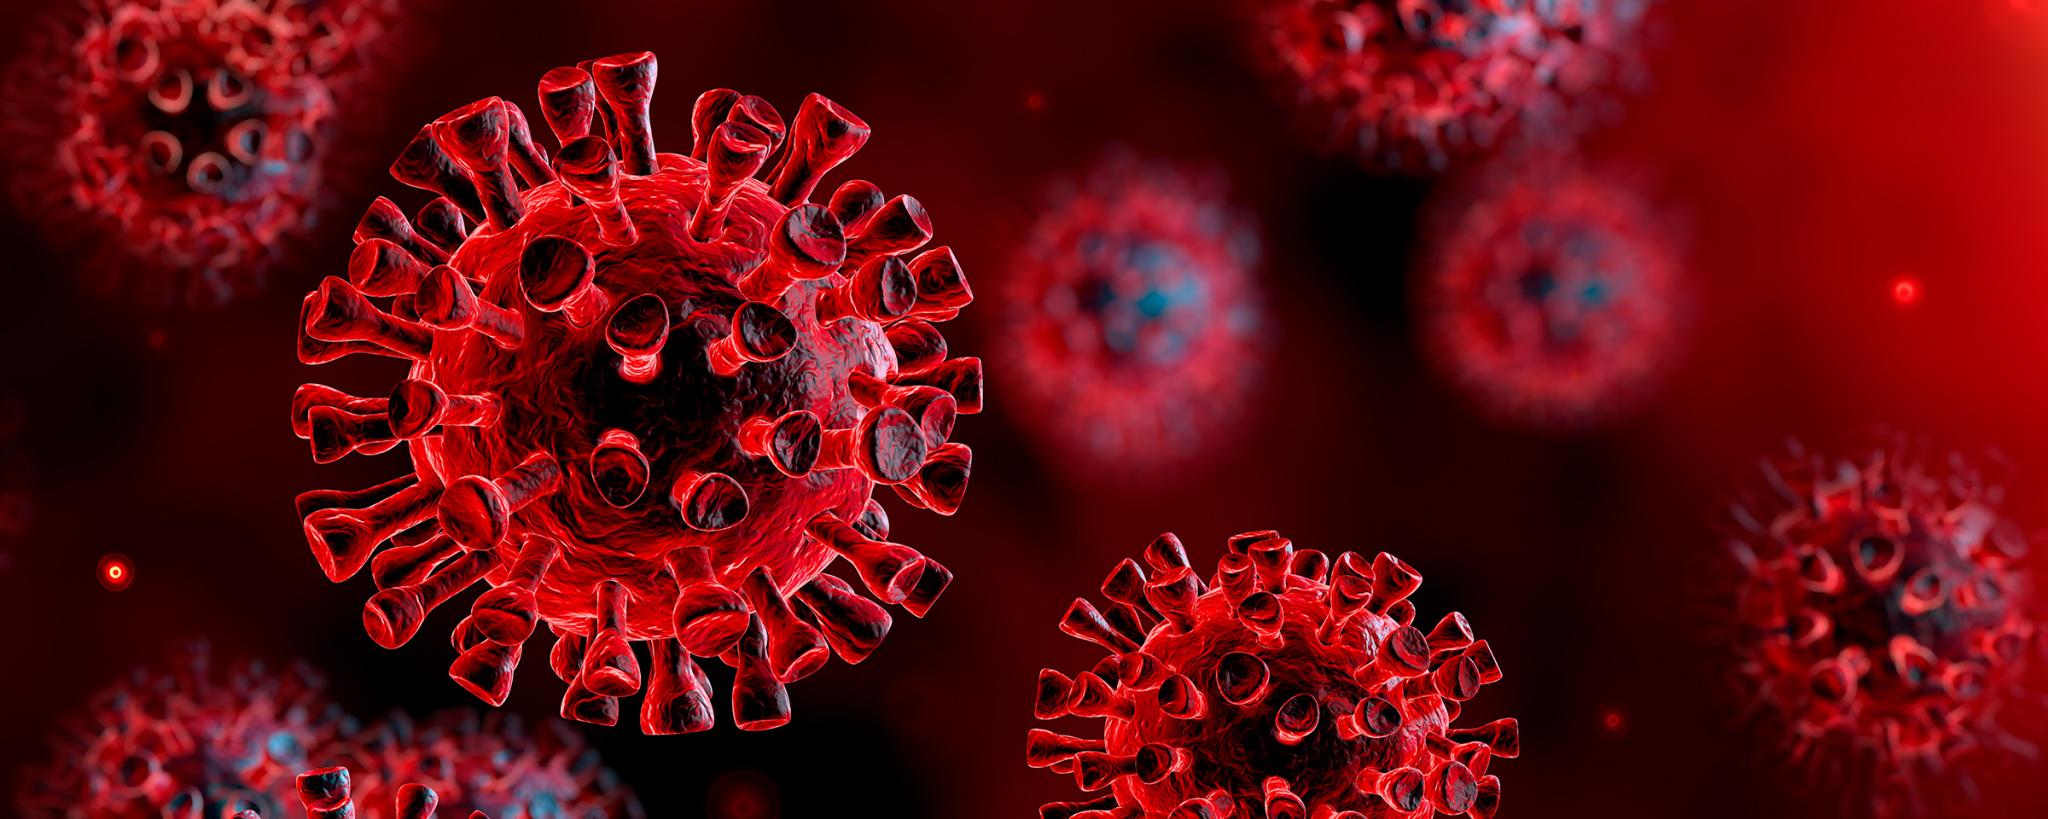 corona virus infektiologie ksa